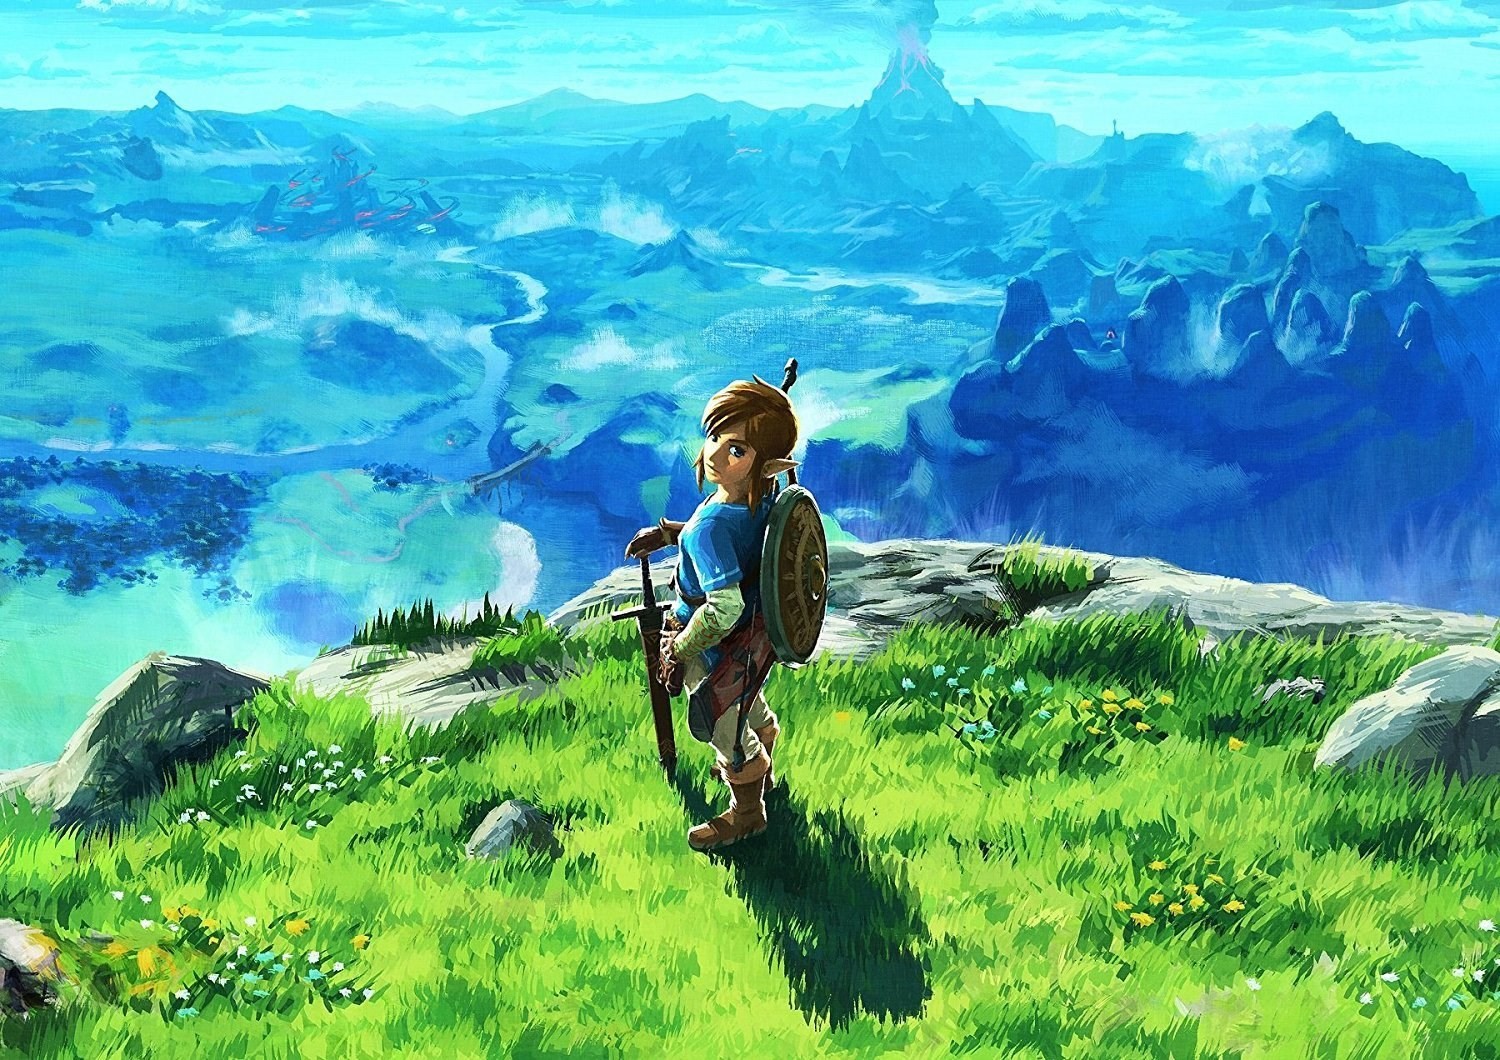 Live-action The Legend of Zelda movie in development at Nintendo